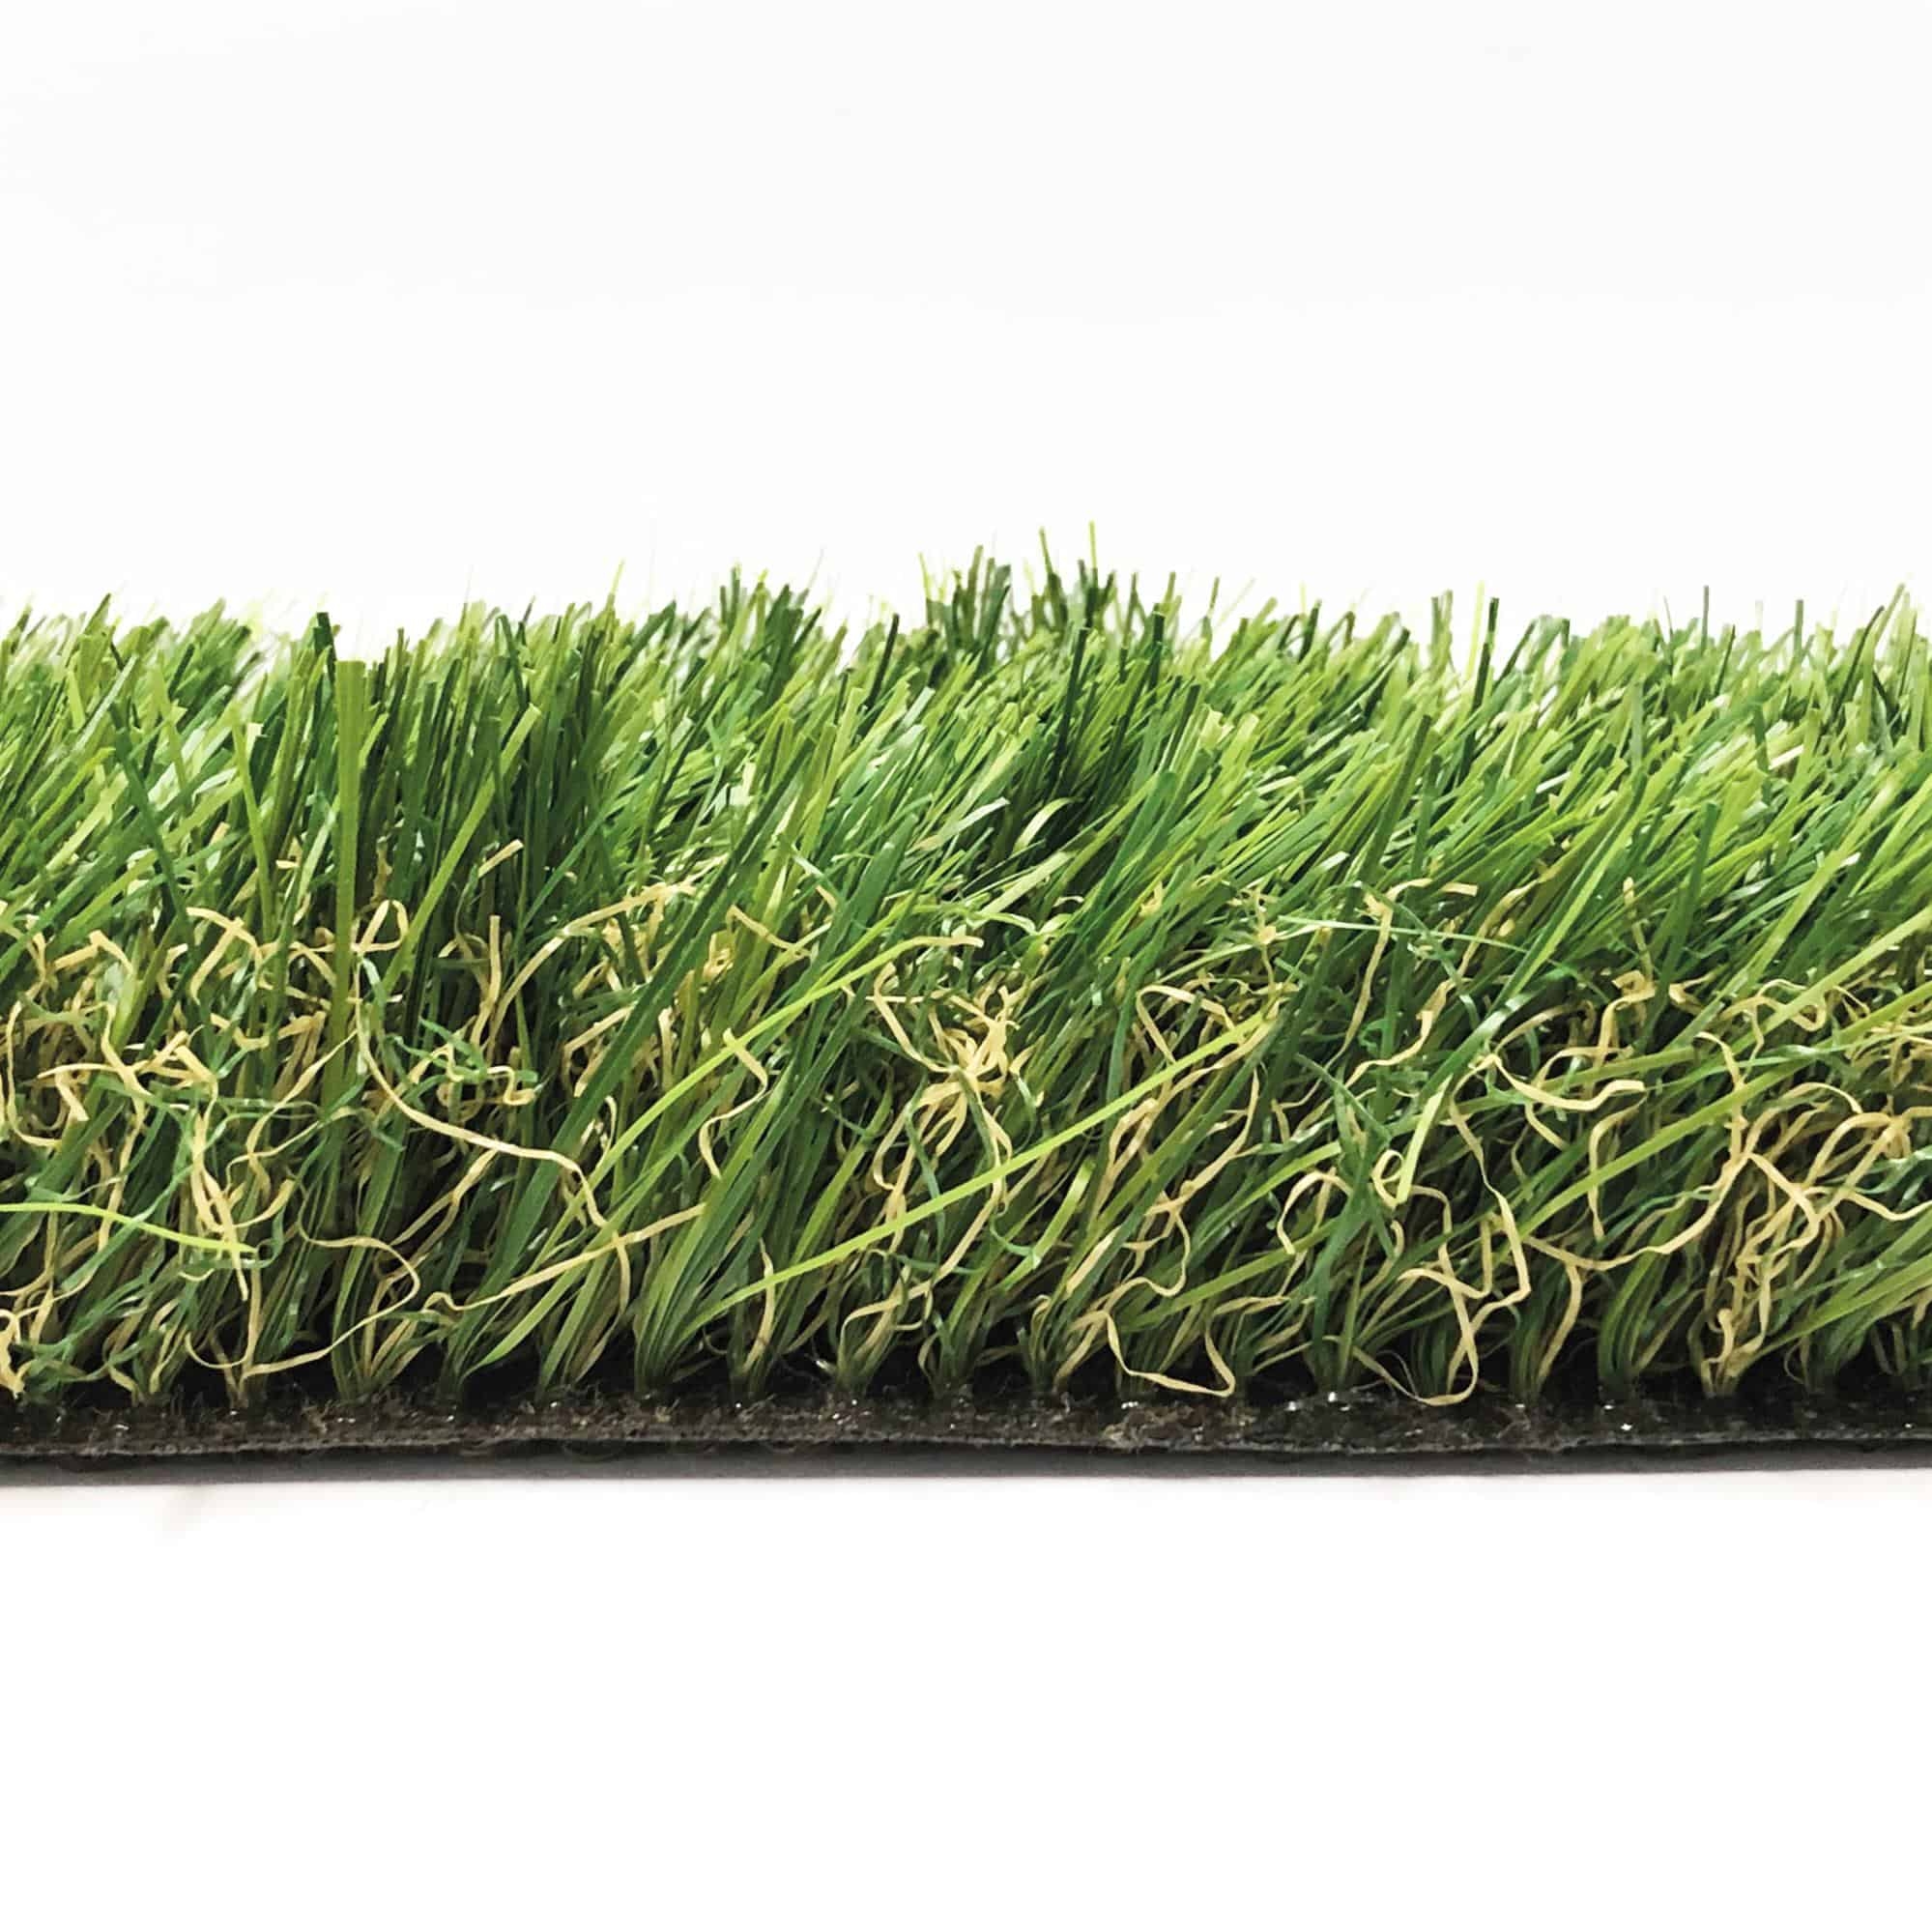 CORE Lawn Natural Artificial Grass 4m Wide Roll 3m